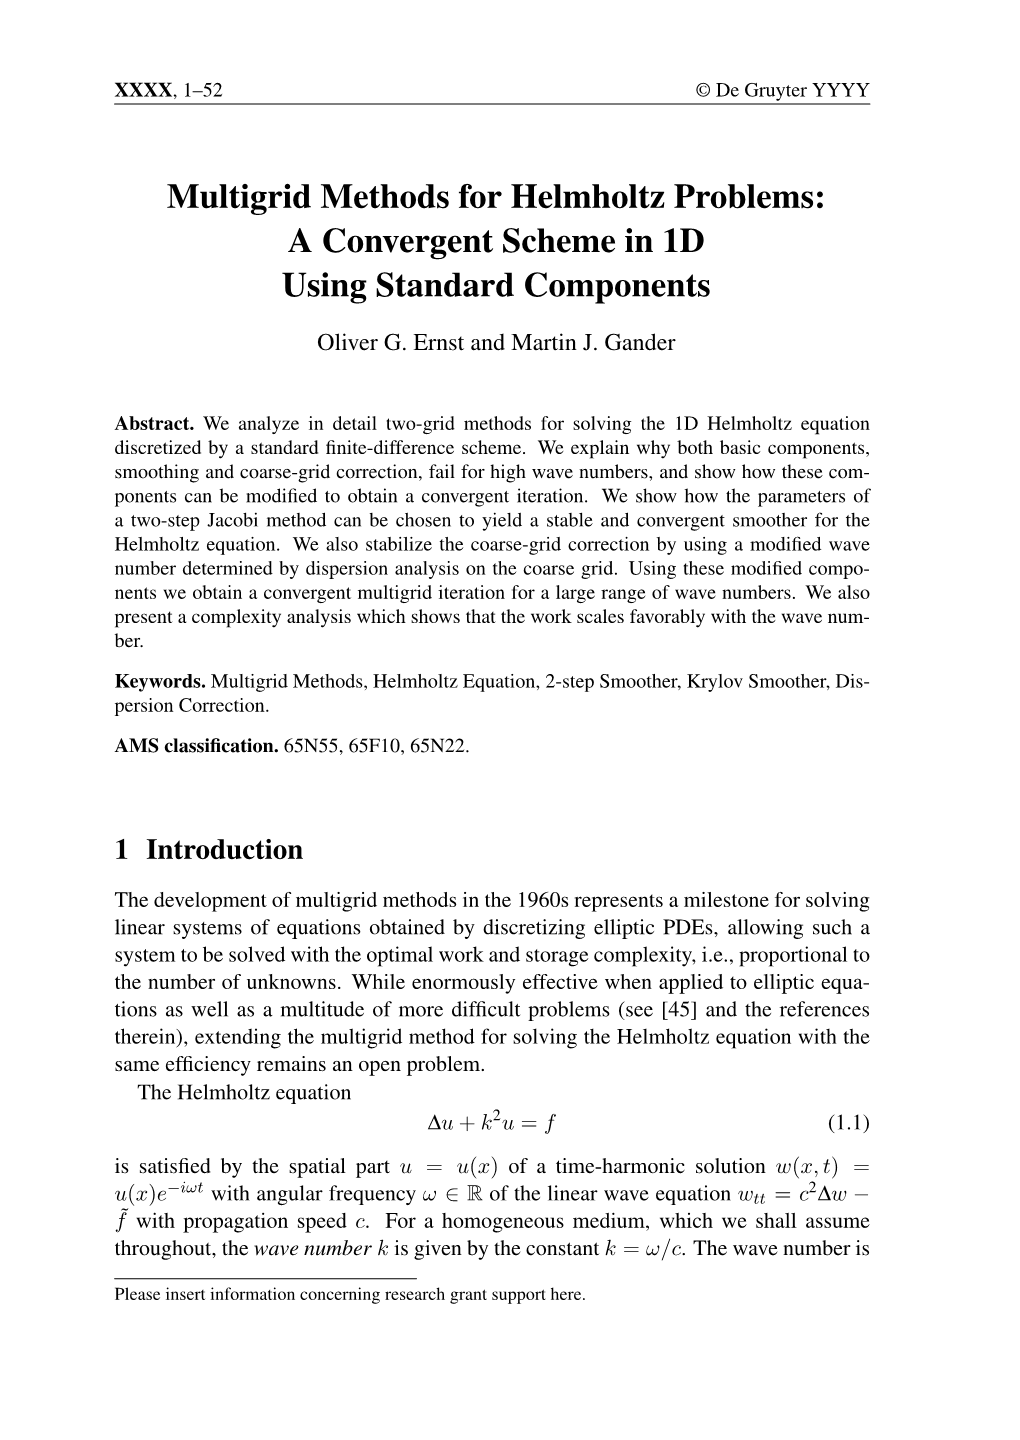 Multigrid Methods for Helmholtz Problems: a Convergent Scheme in 1D Using Standard Components